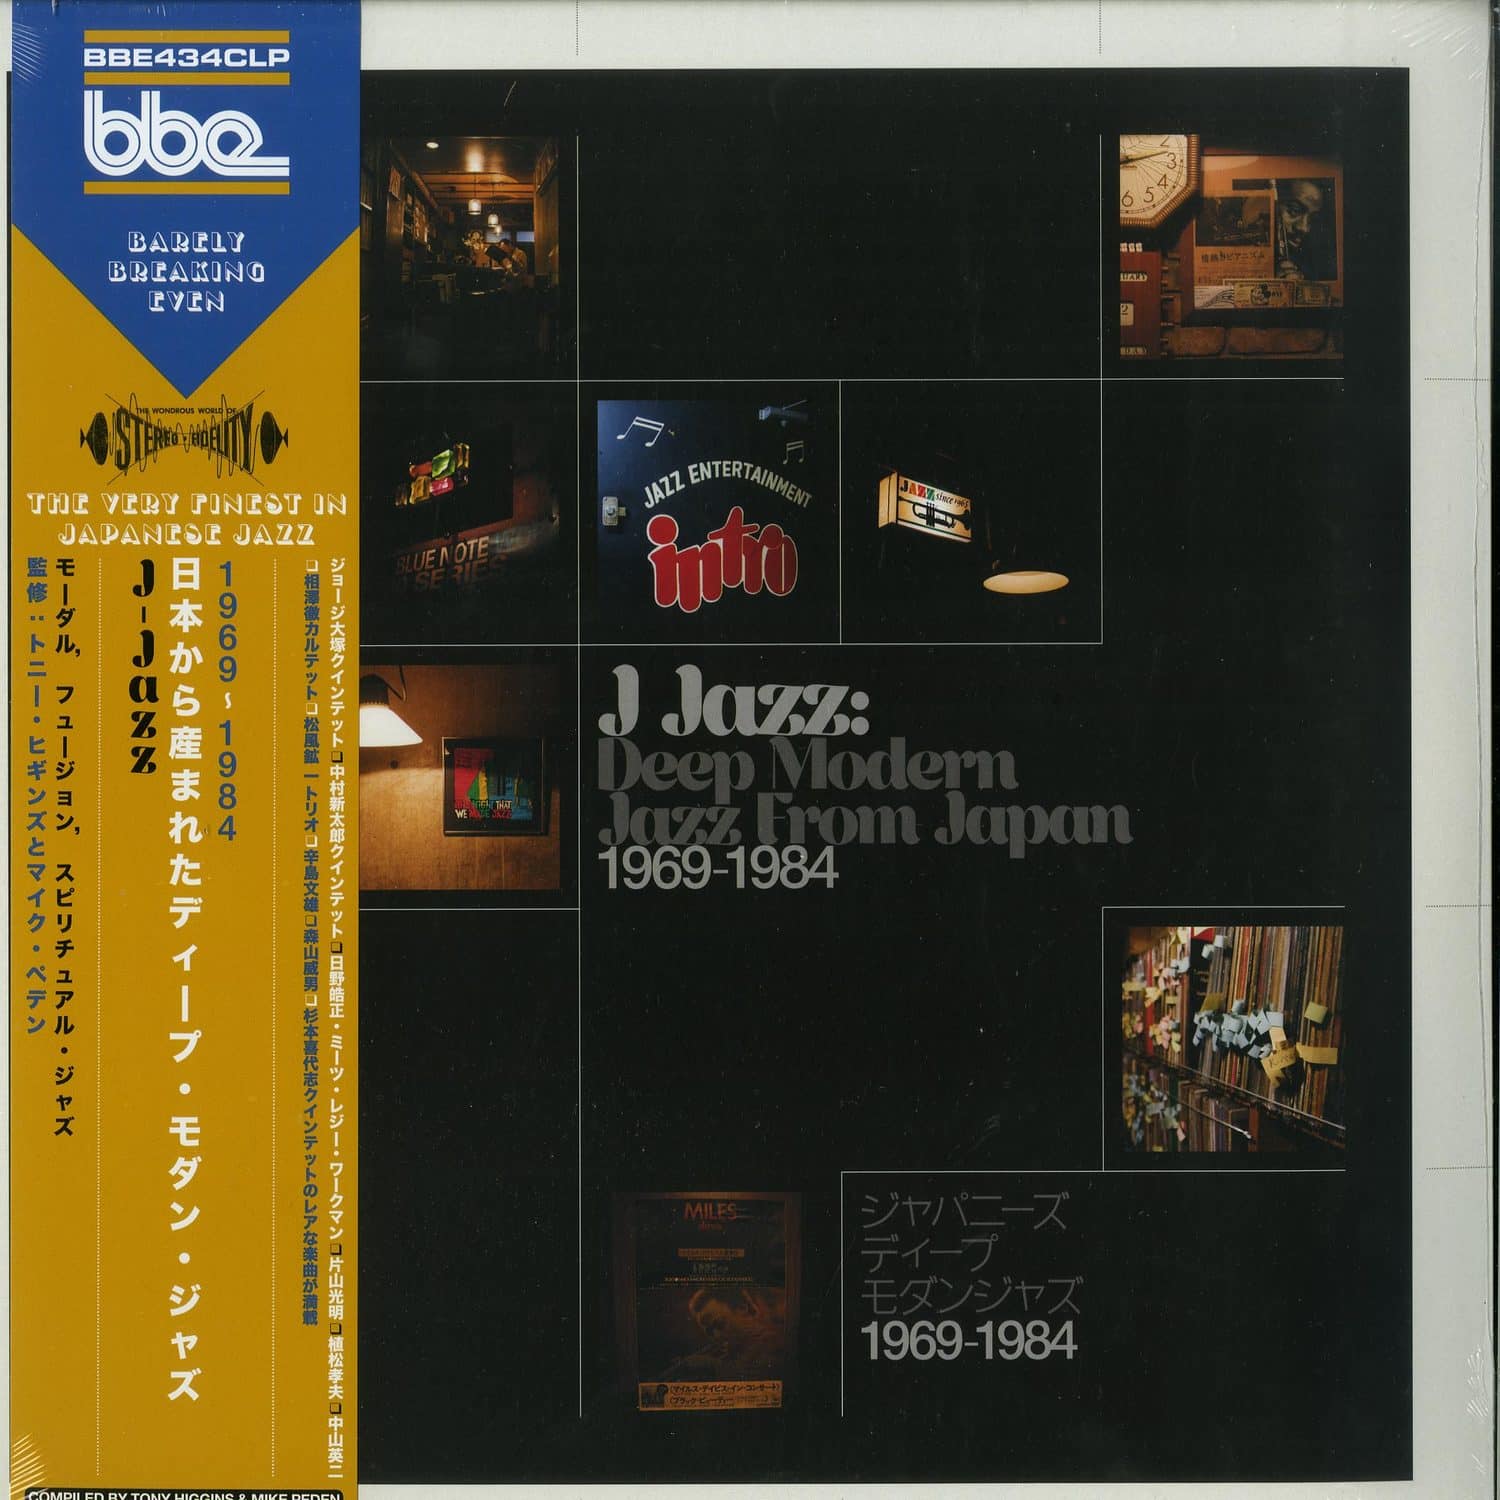 Various Artists - J-JAZZ - DEEP MODERN JAZZ FROM JAPAN 1969-1984 